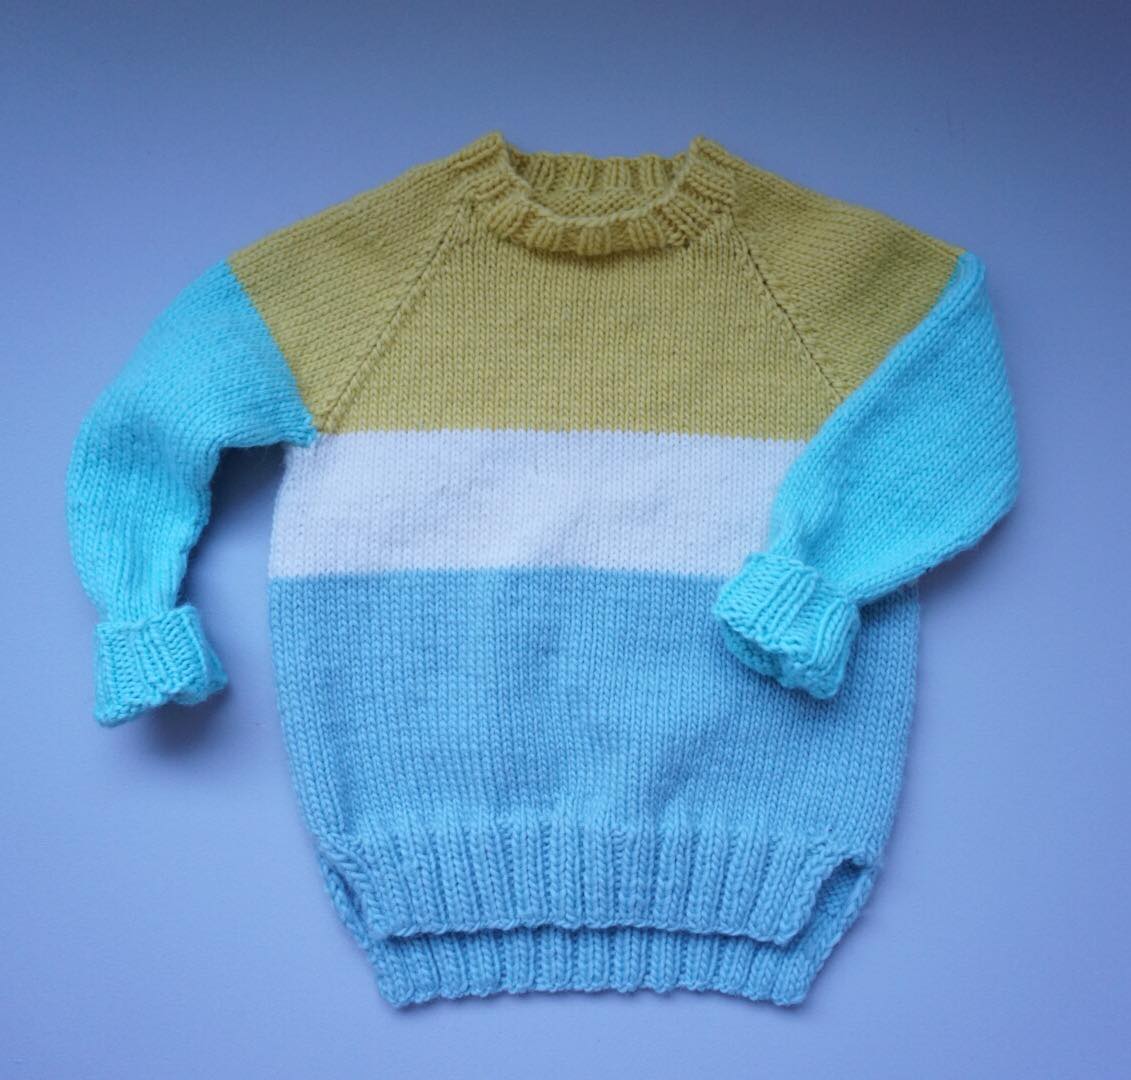 jubelgenser jente gutt strikkeoppskrift - Jubel sweater kids | Knitting kit for kids sweater- by HipKnitShop - 12/02/2018